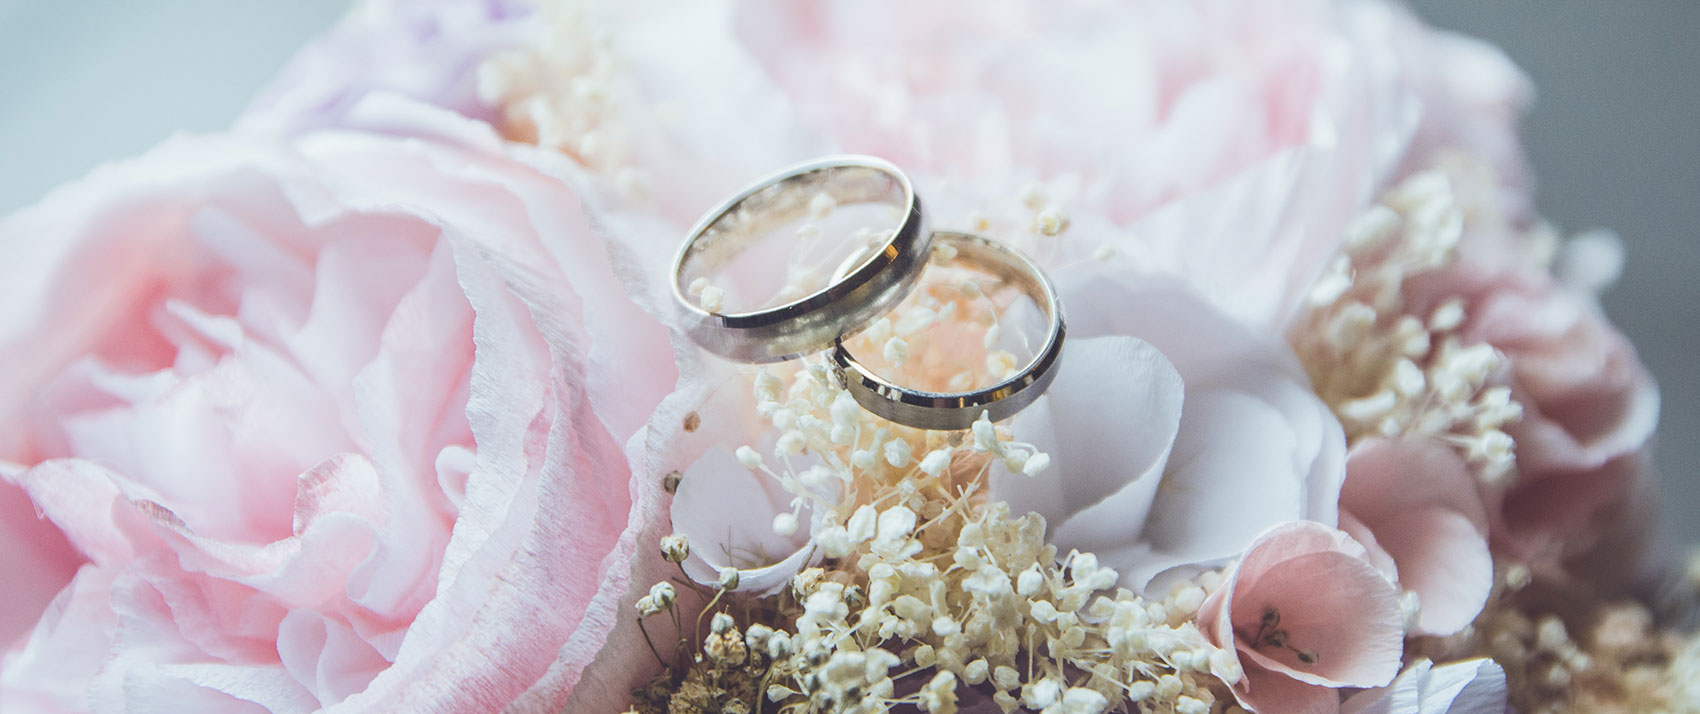 wedding flowers with wedding rings